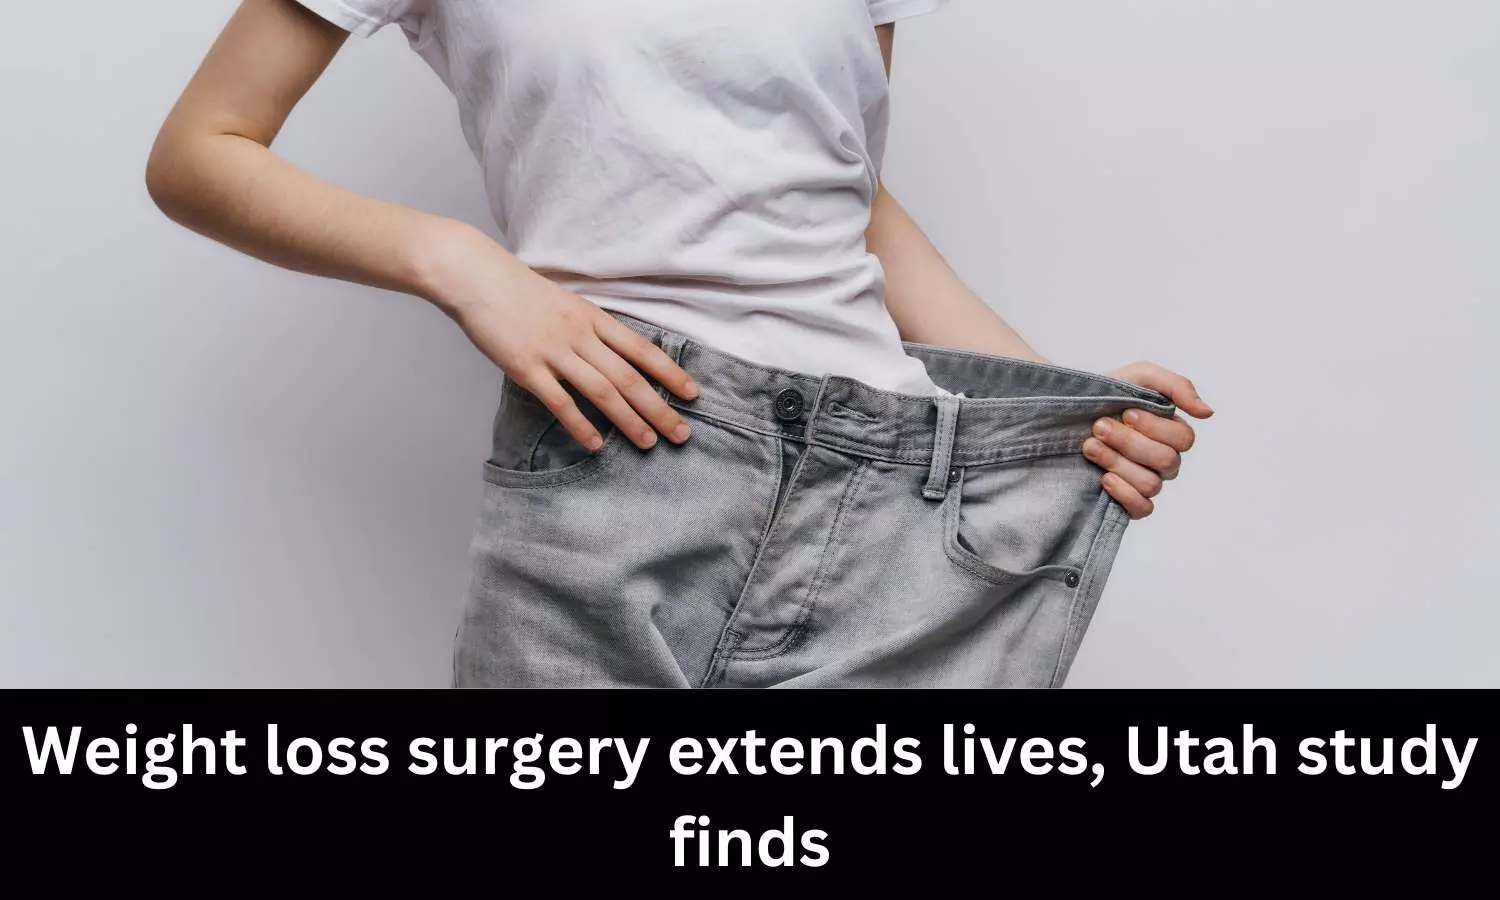 Weight loss surgery extends lives, Utah study finds